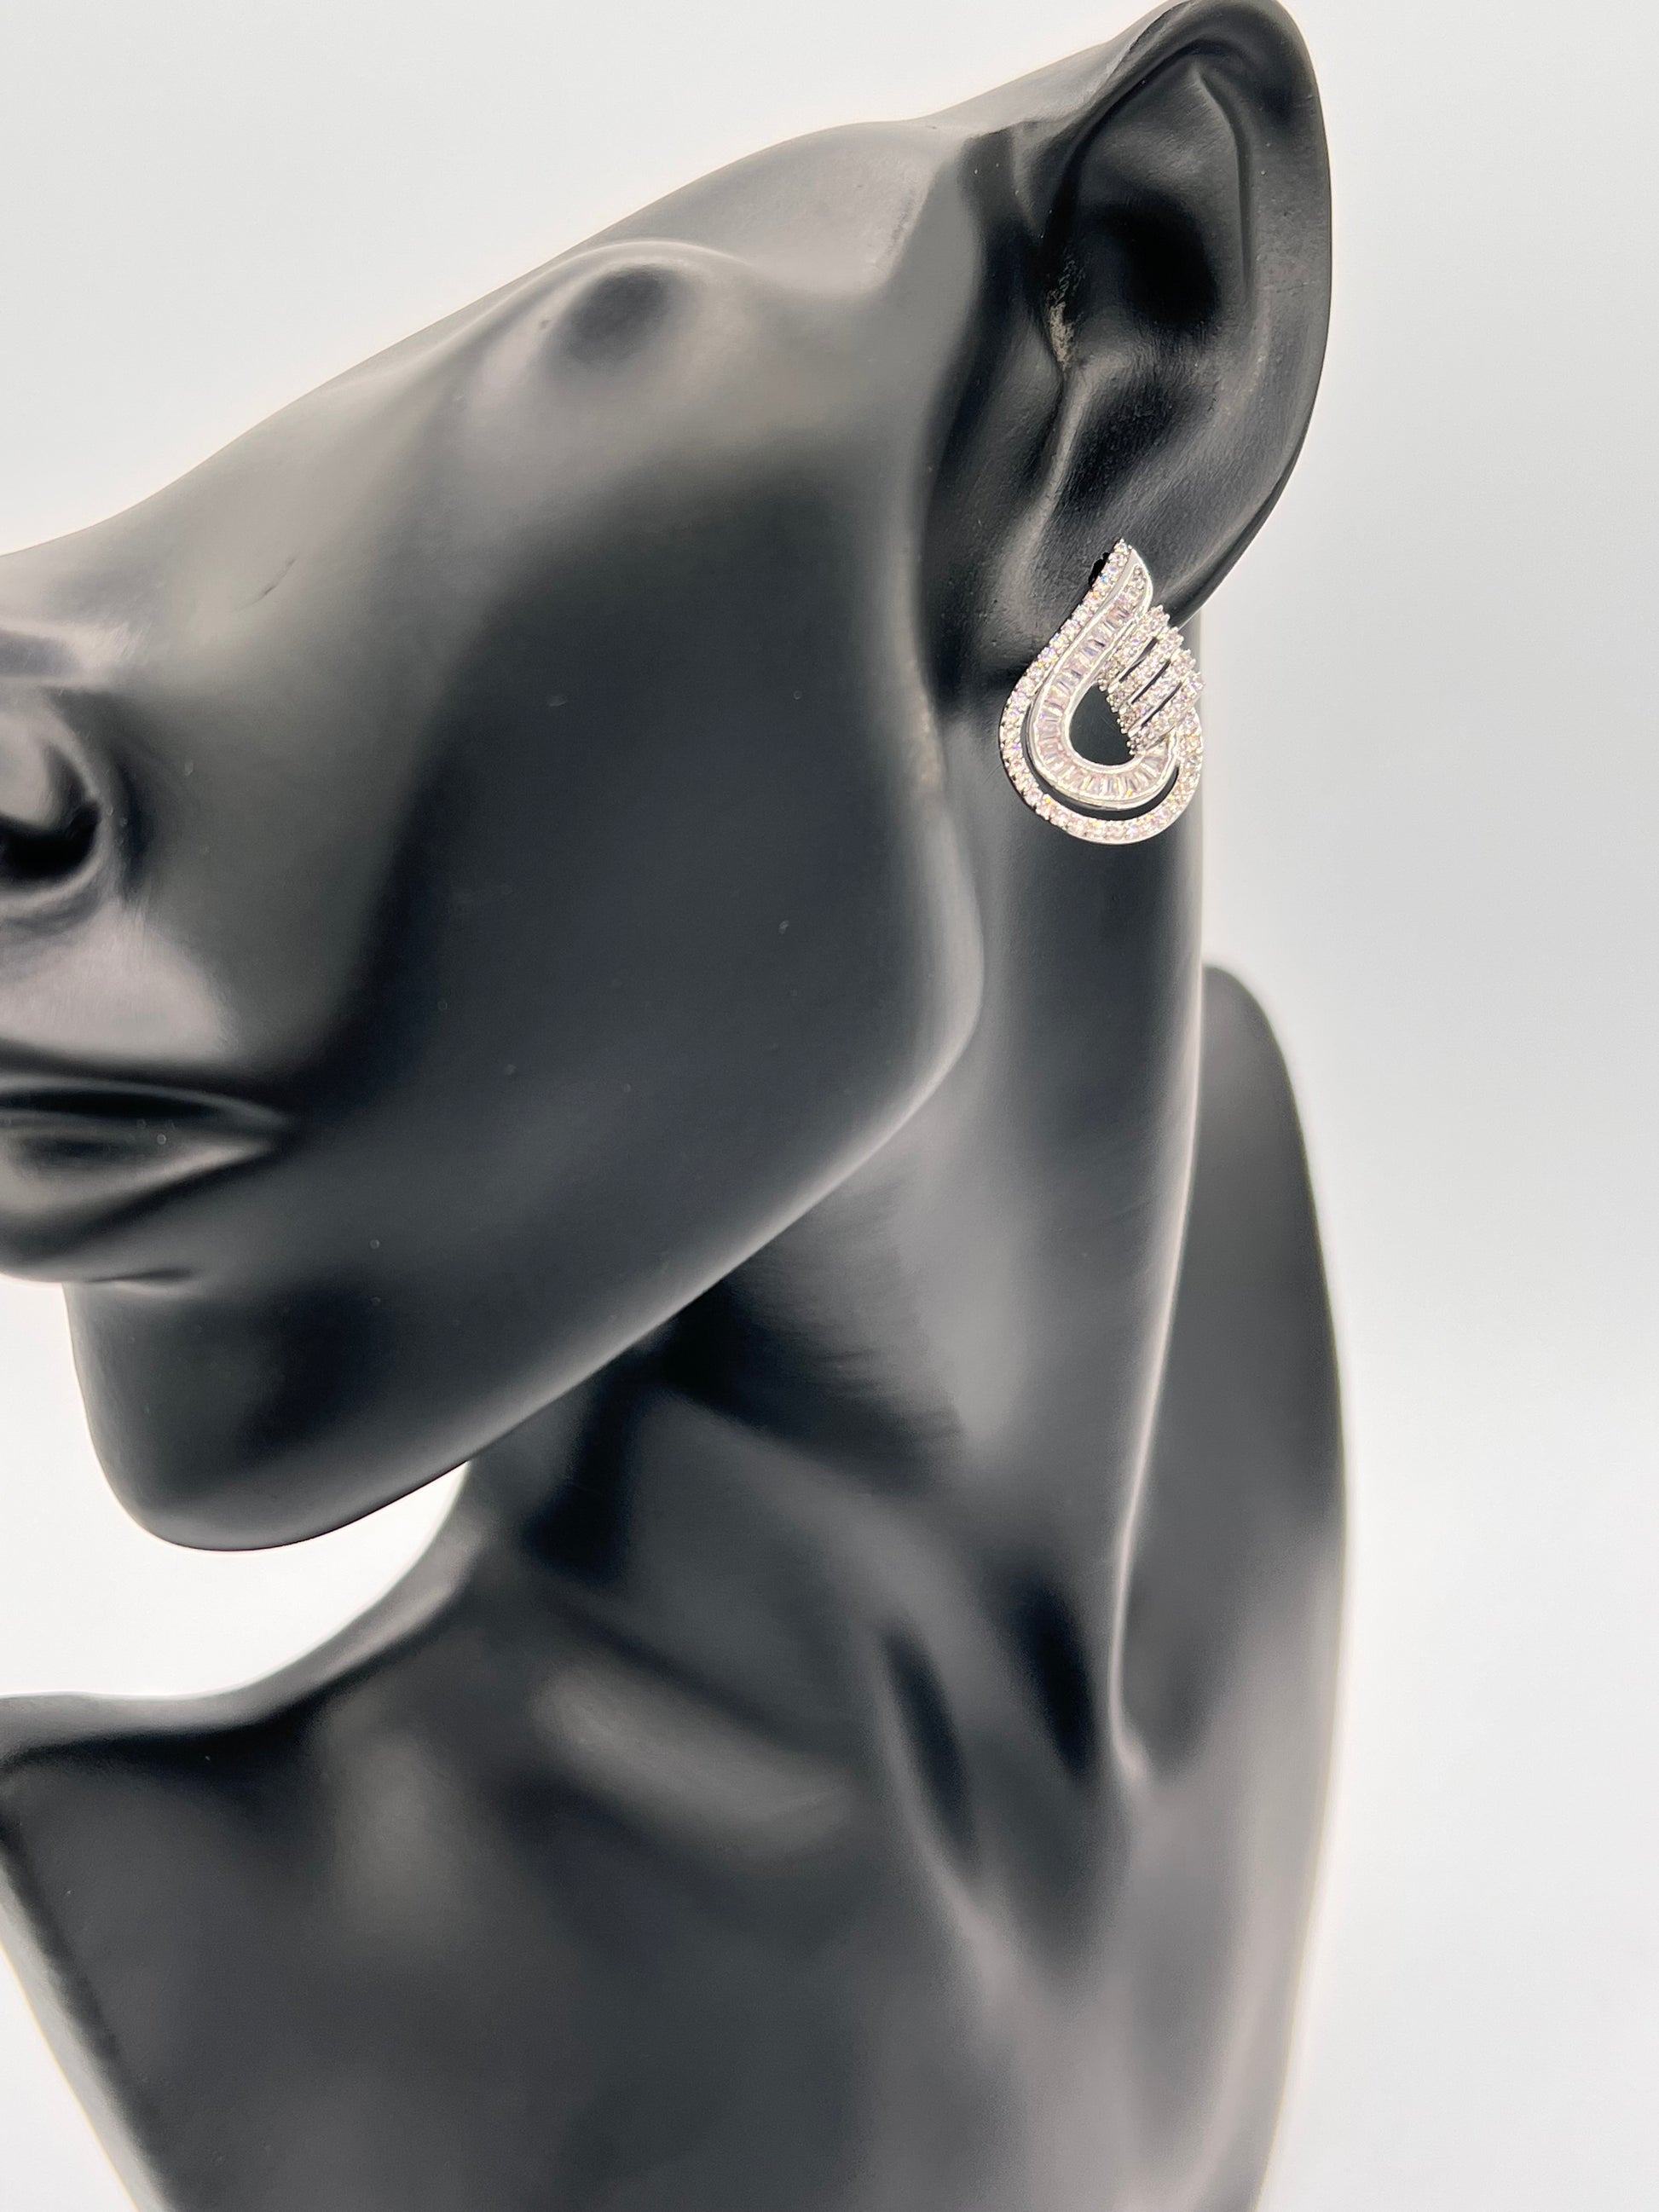 beautiful double tear loops design silver earring studs for women. trend setter non tarnish ewelry